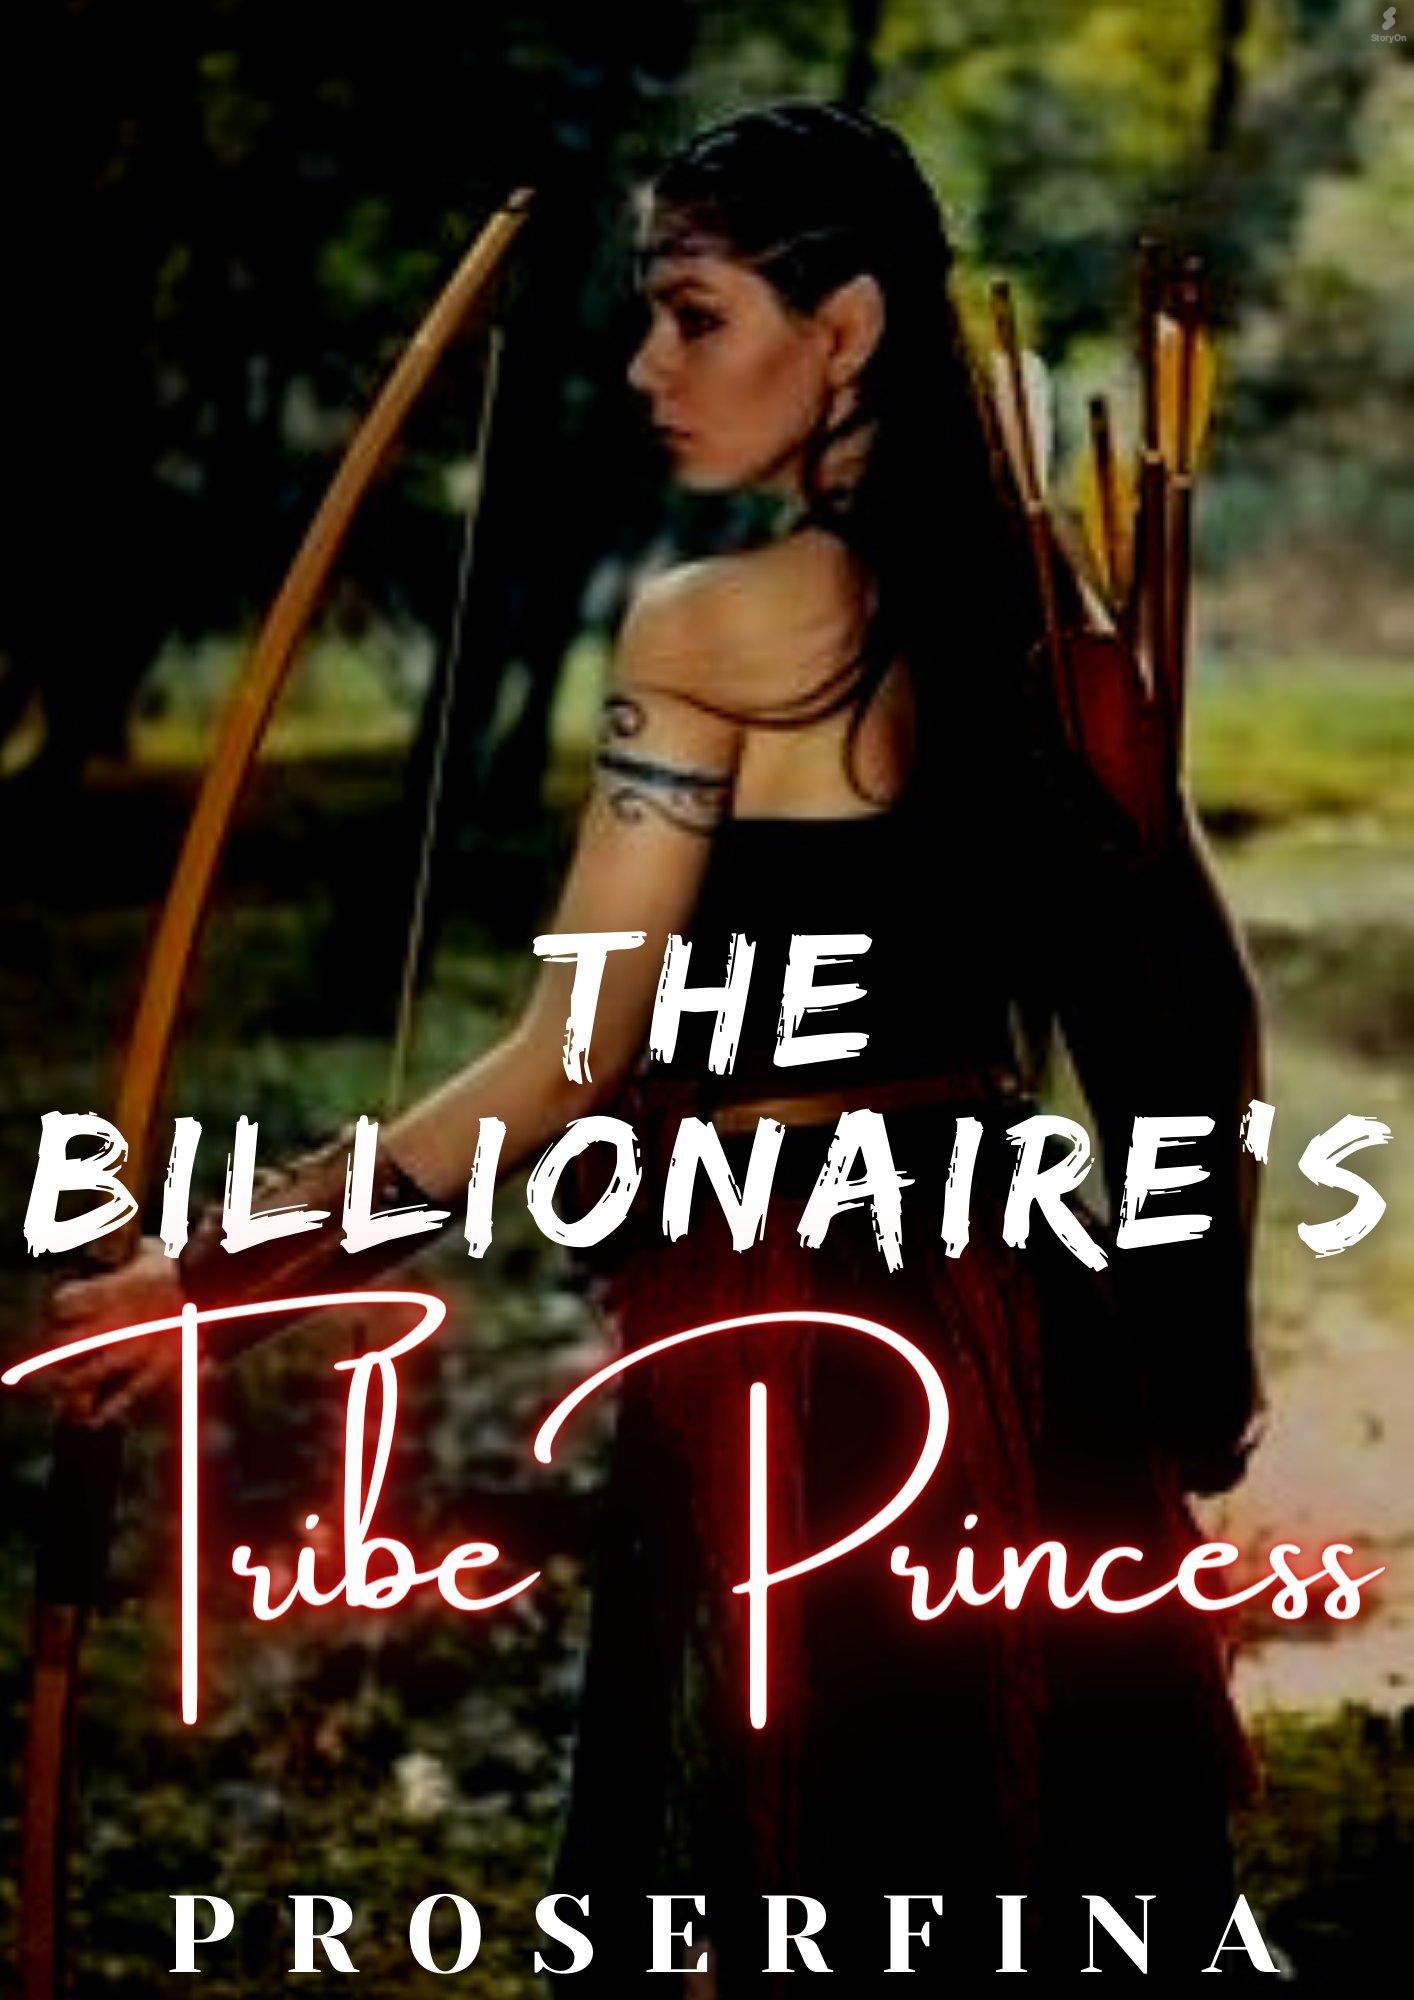 The Billionaire's tribe princess